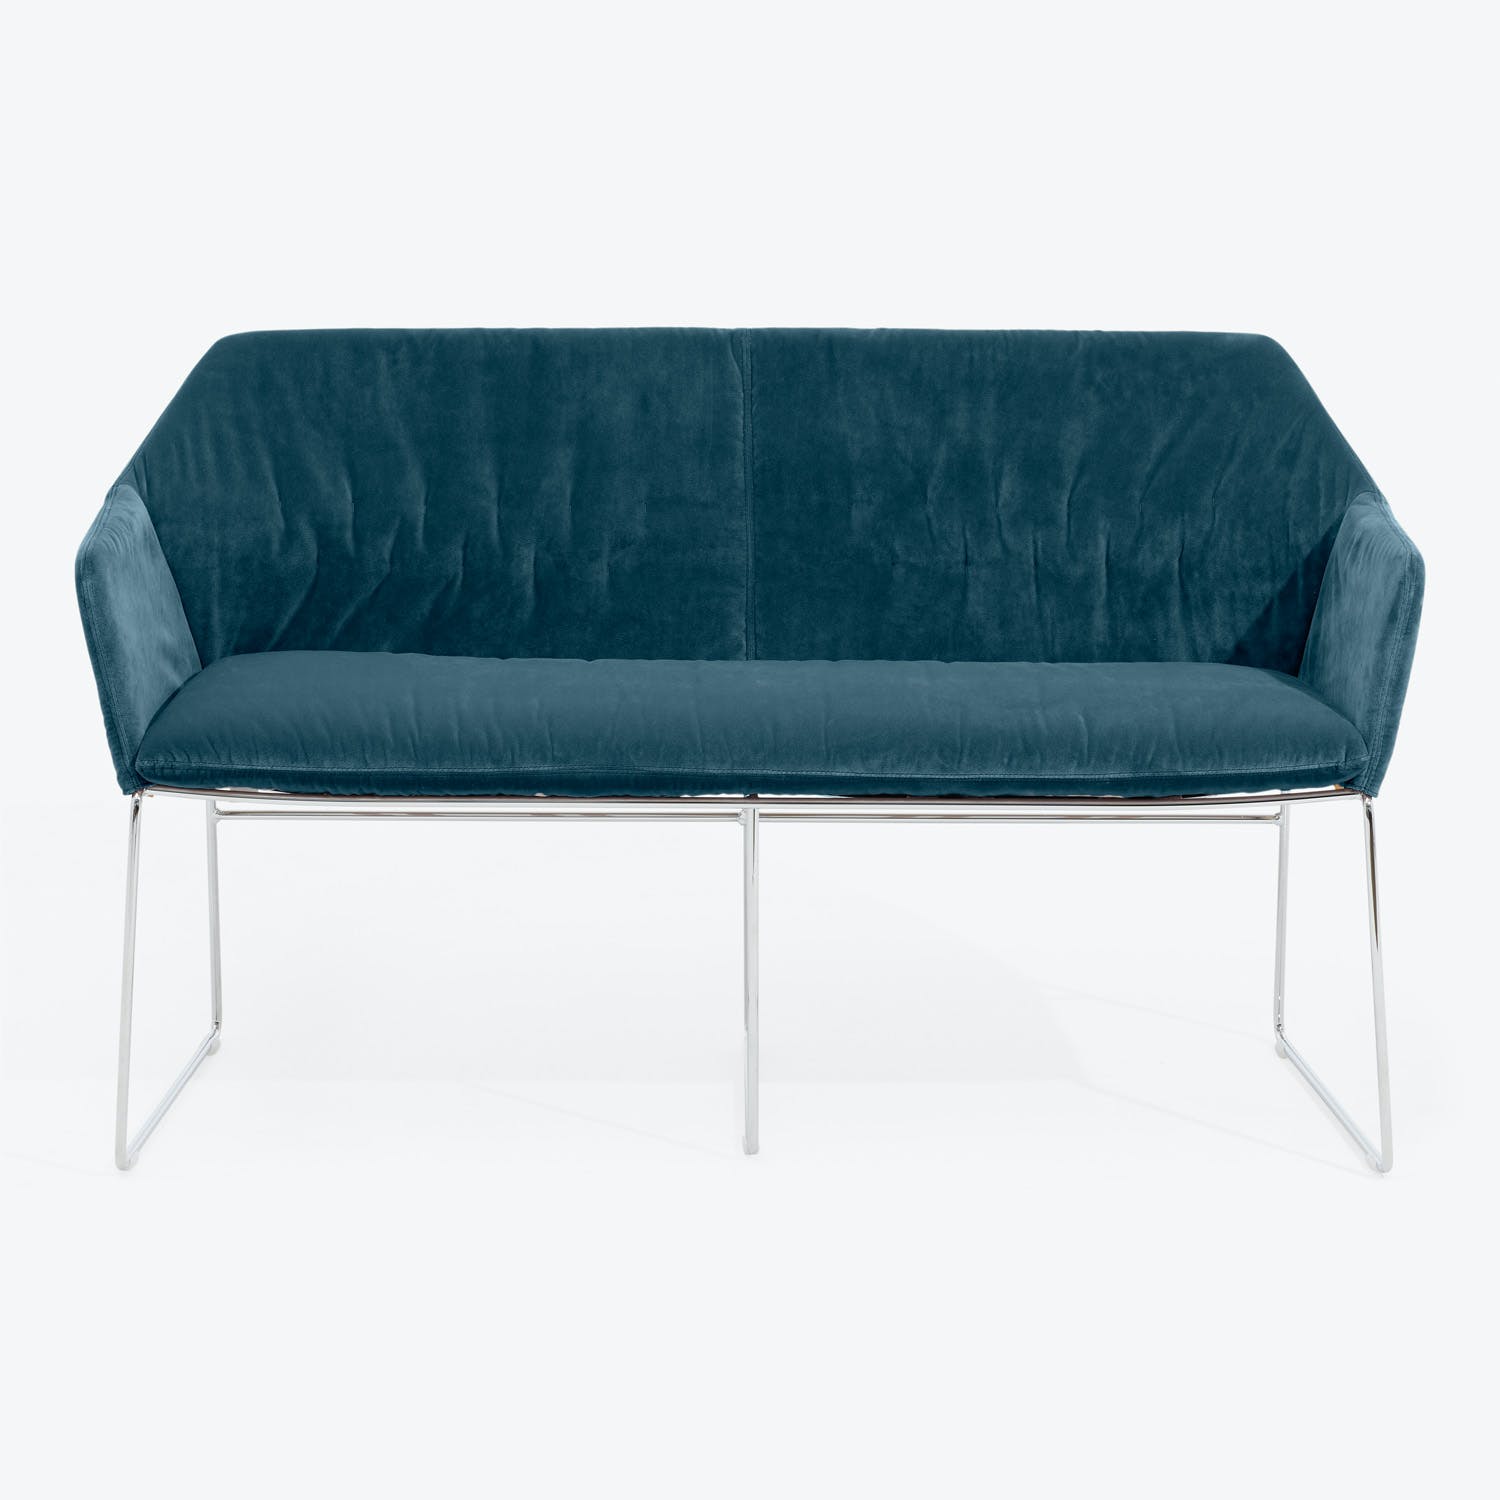 Contemporary blue velvet sofa with sleek design and plush cushions.